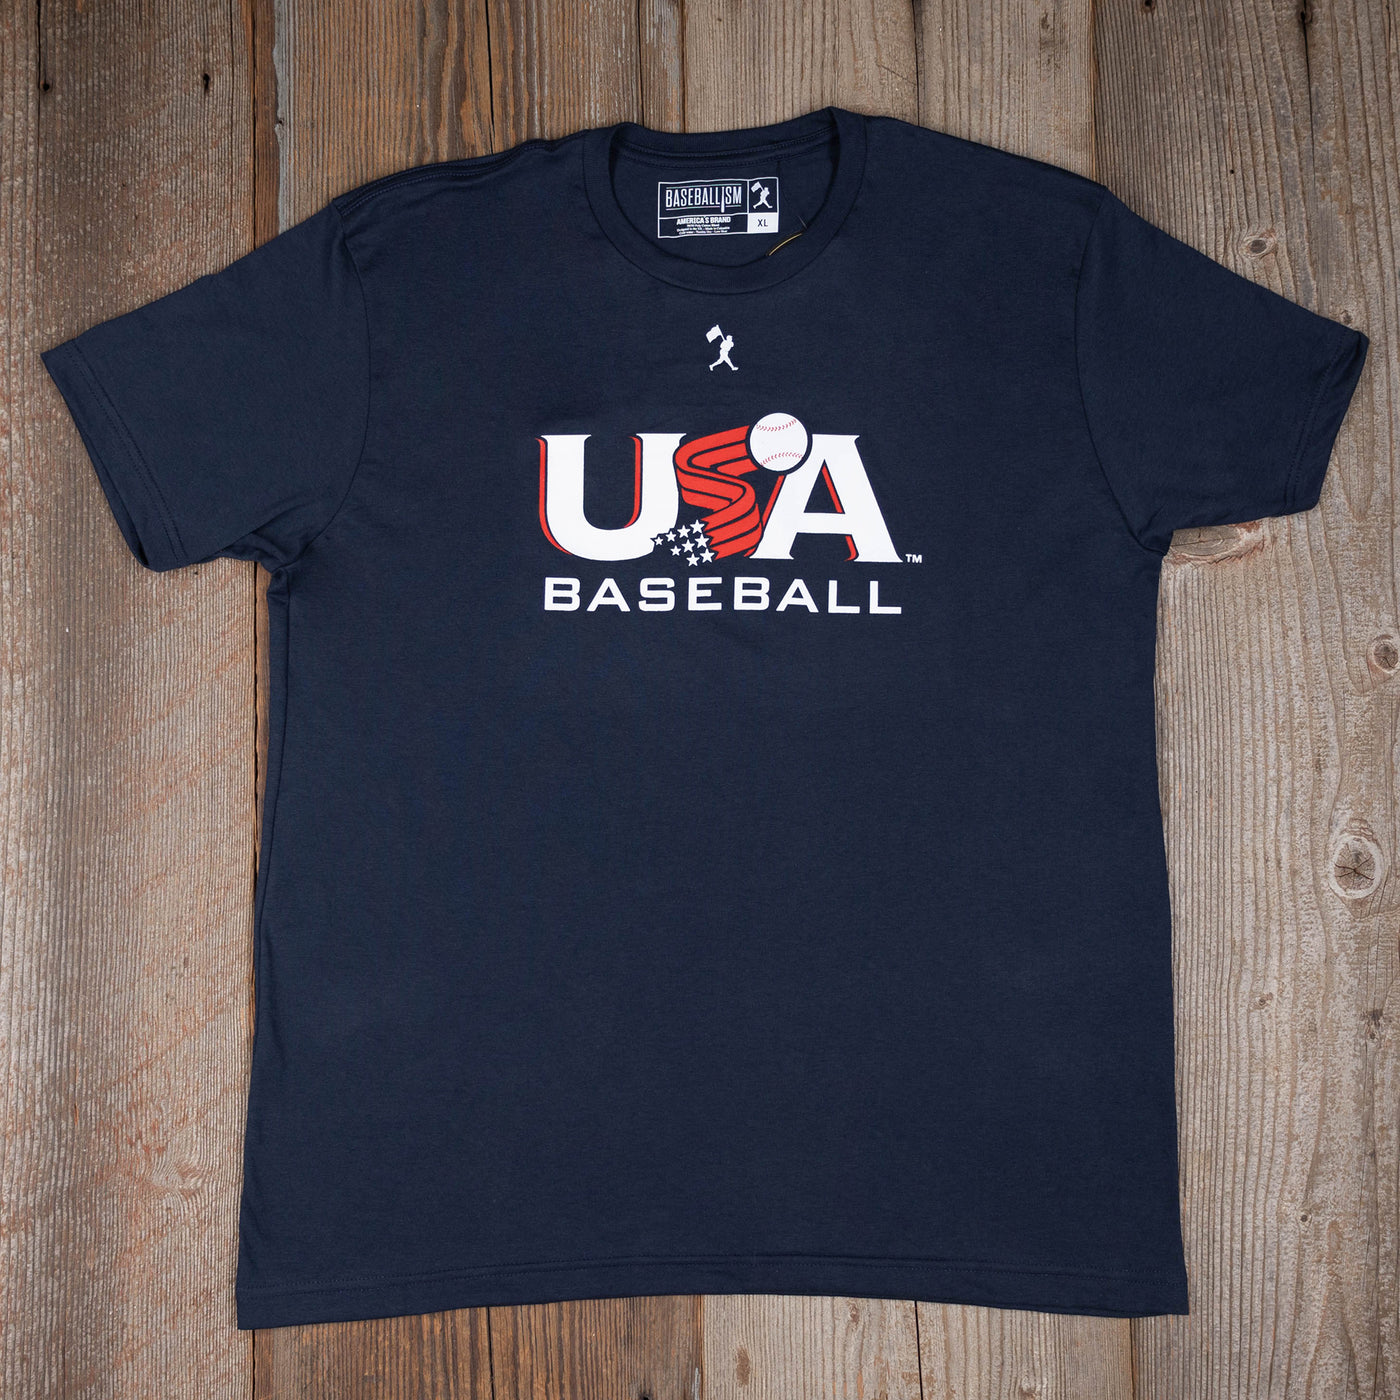 Baseballism x USA Baseball - Azul marino 